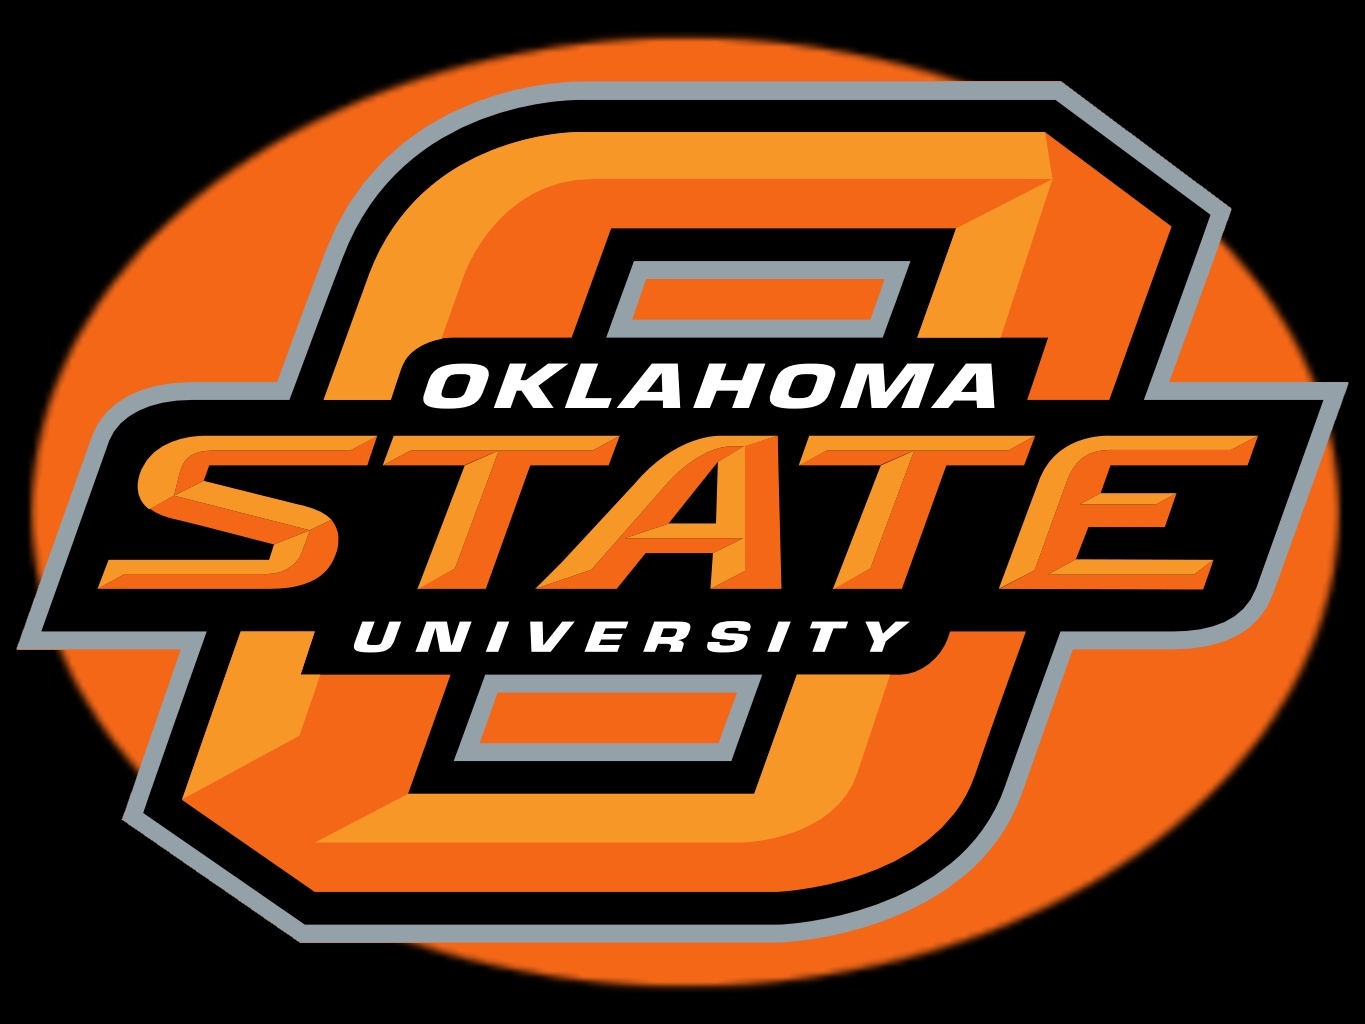 Oklahoma State University Football Seating Chart